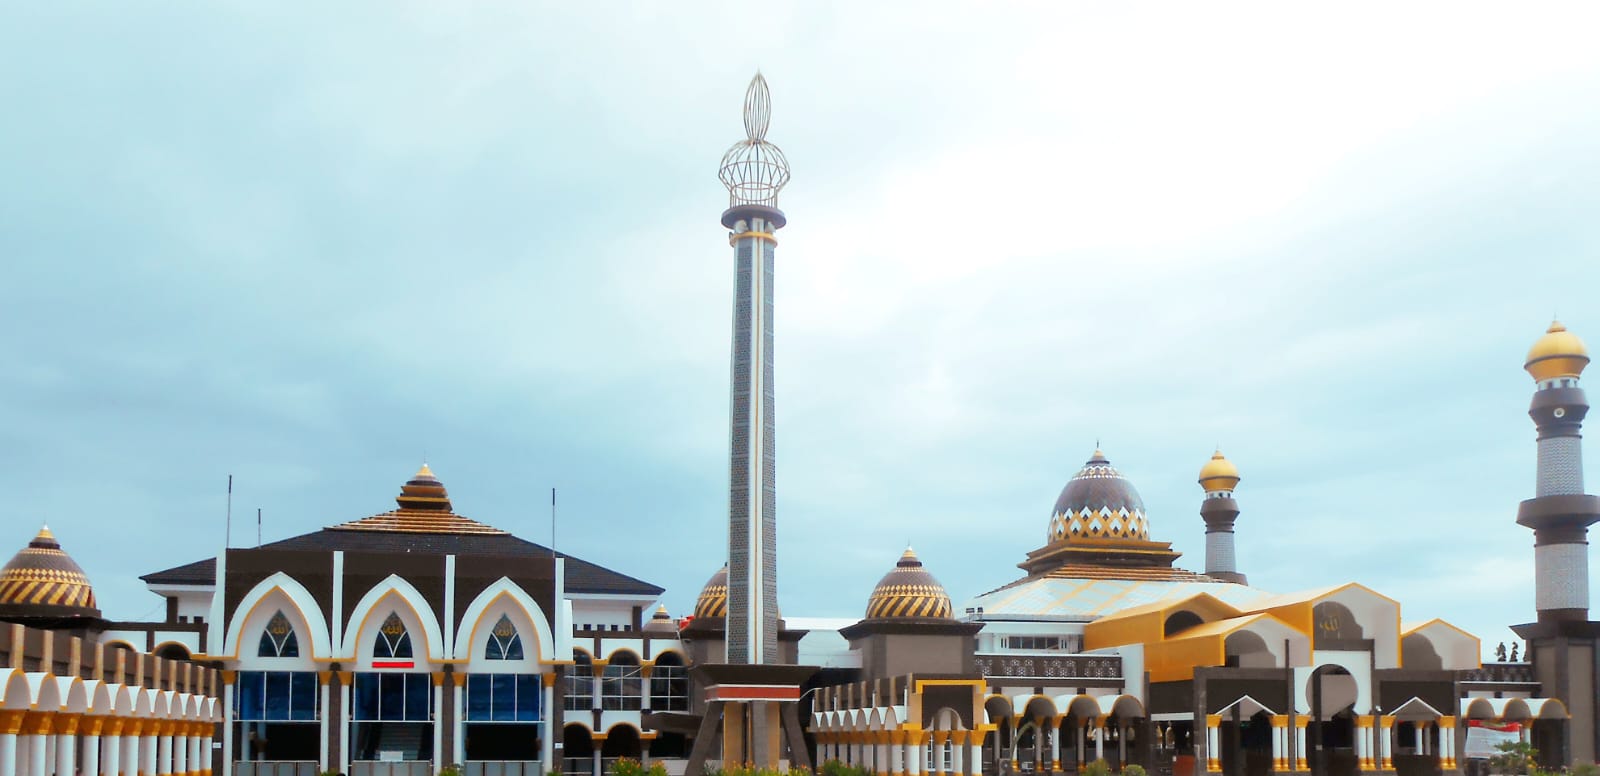 Masjid raya baitul izza bengkulu